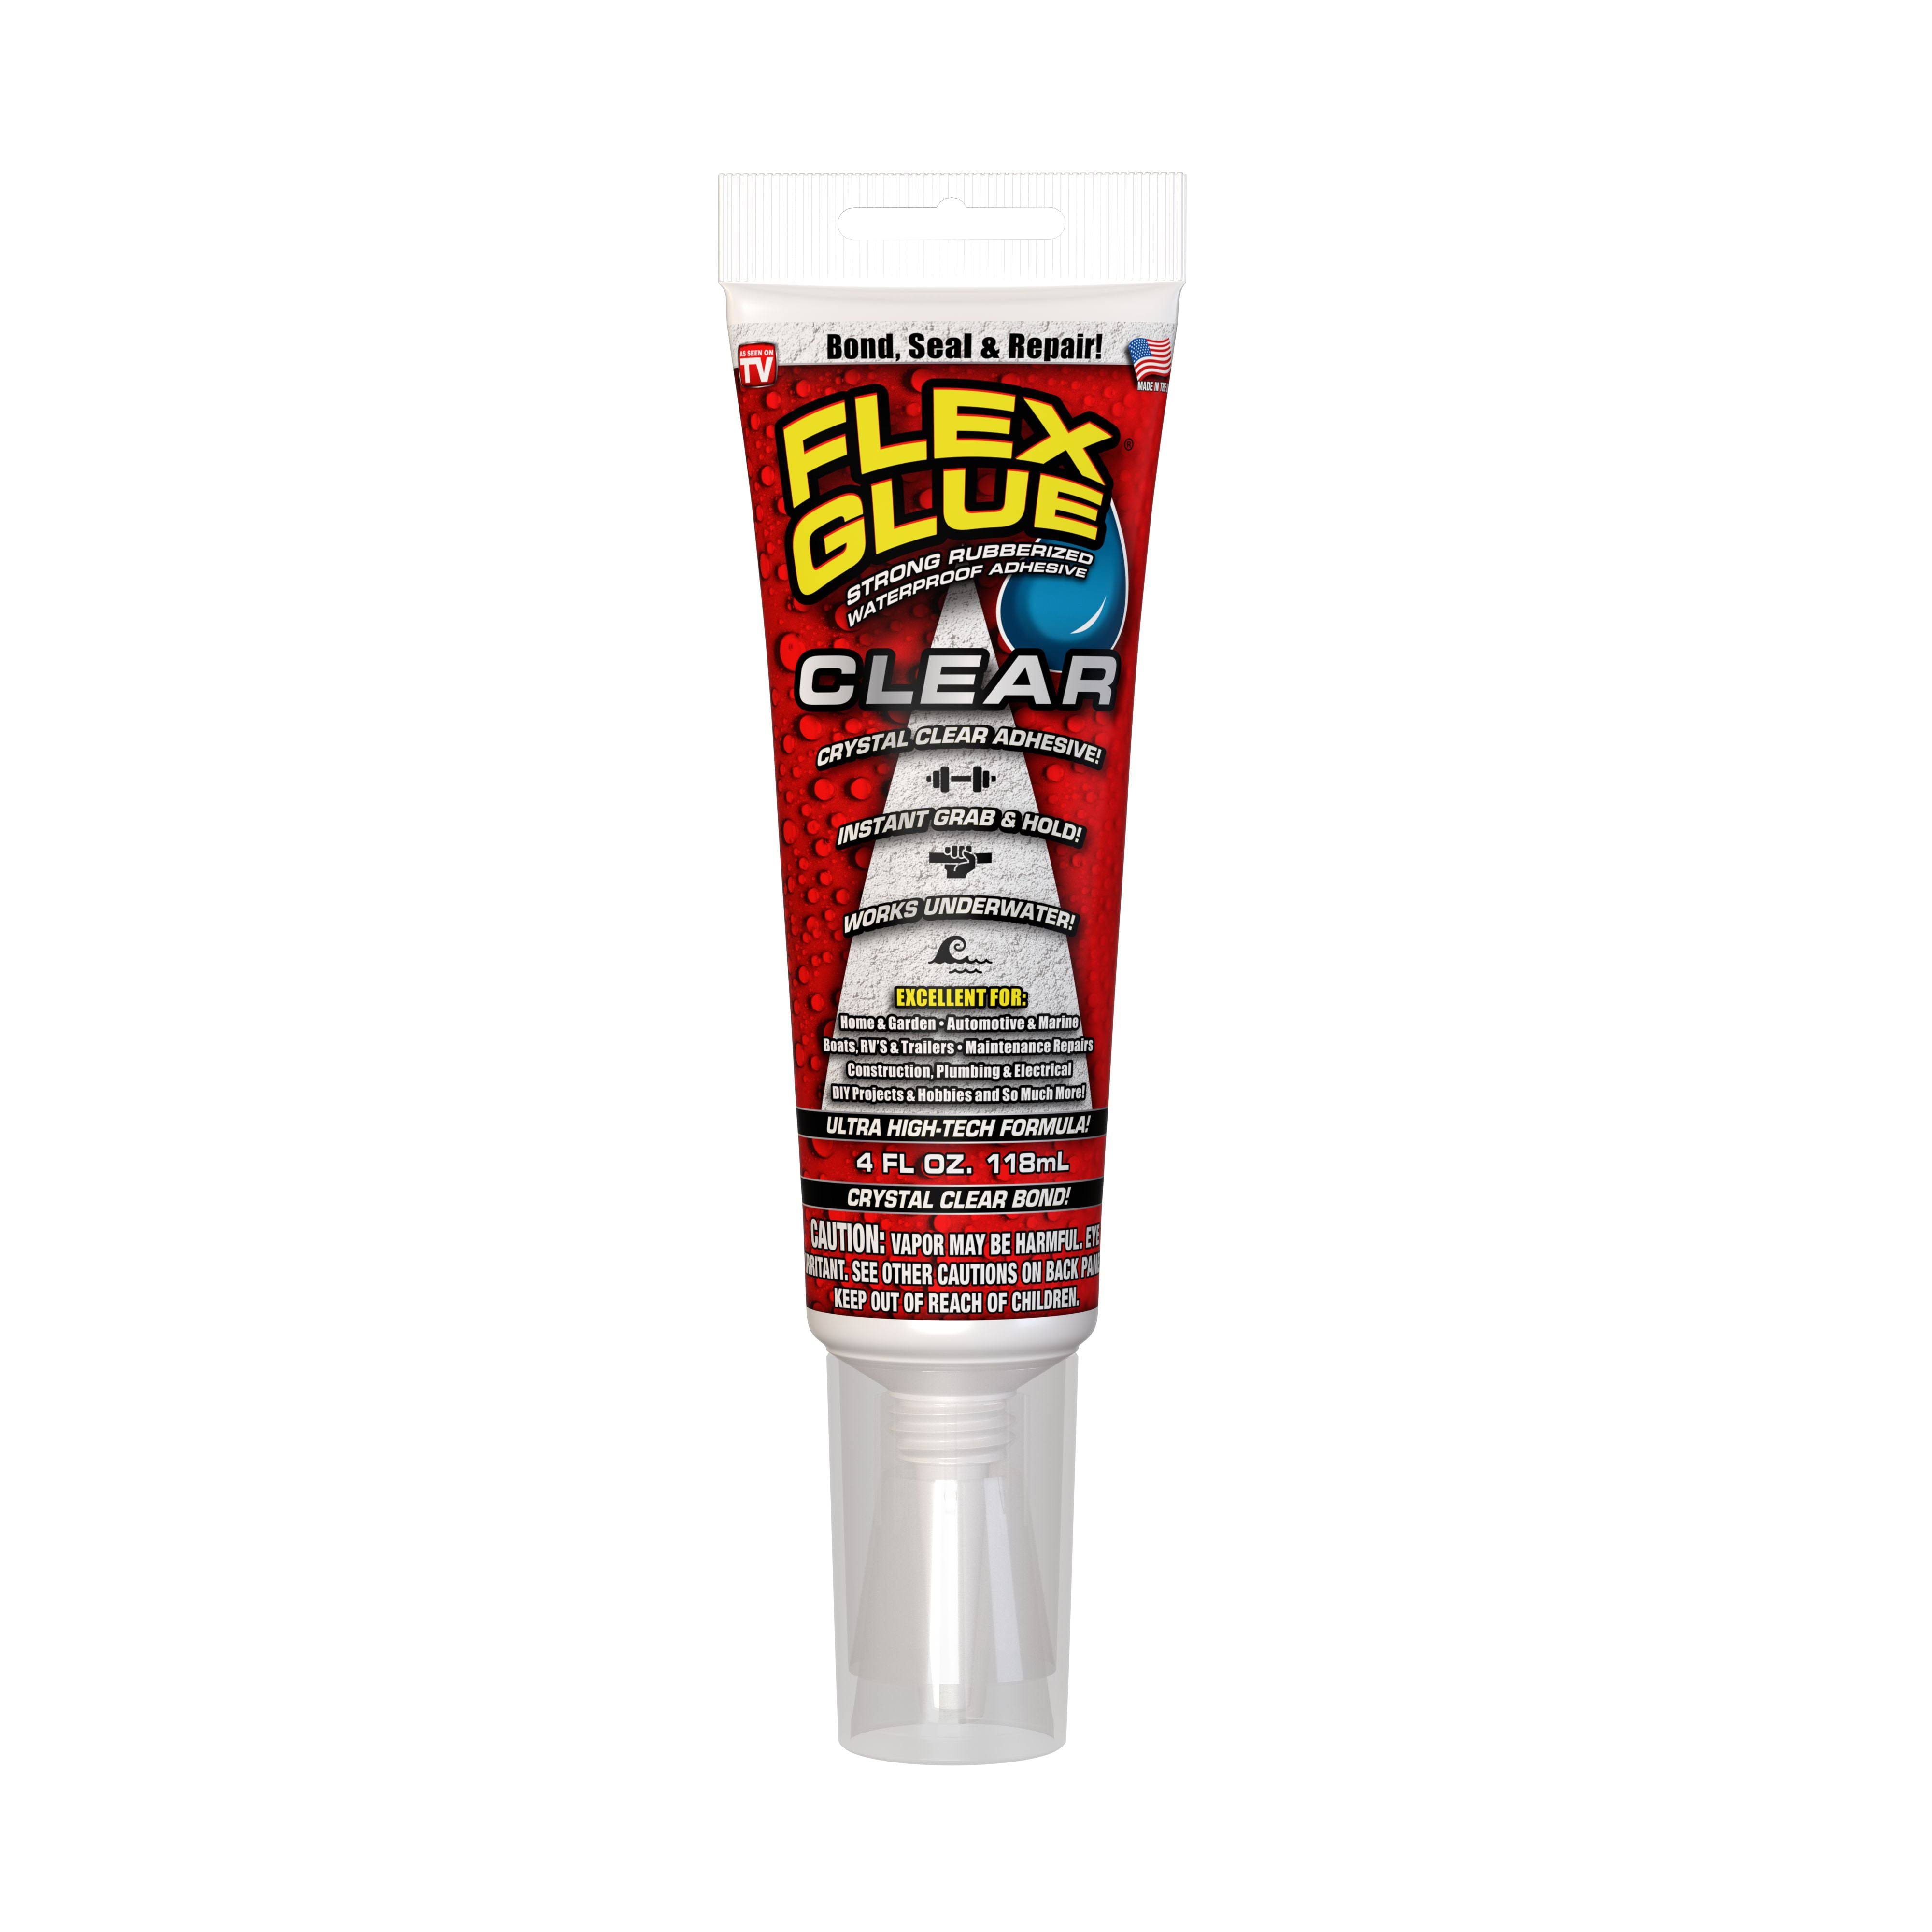 Flex Glue Clear 4 Oz - Super Strong Transparent Waterproof Adhesive